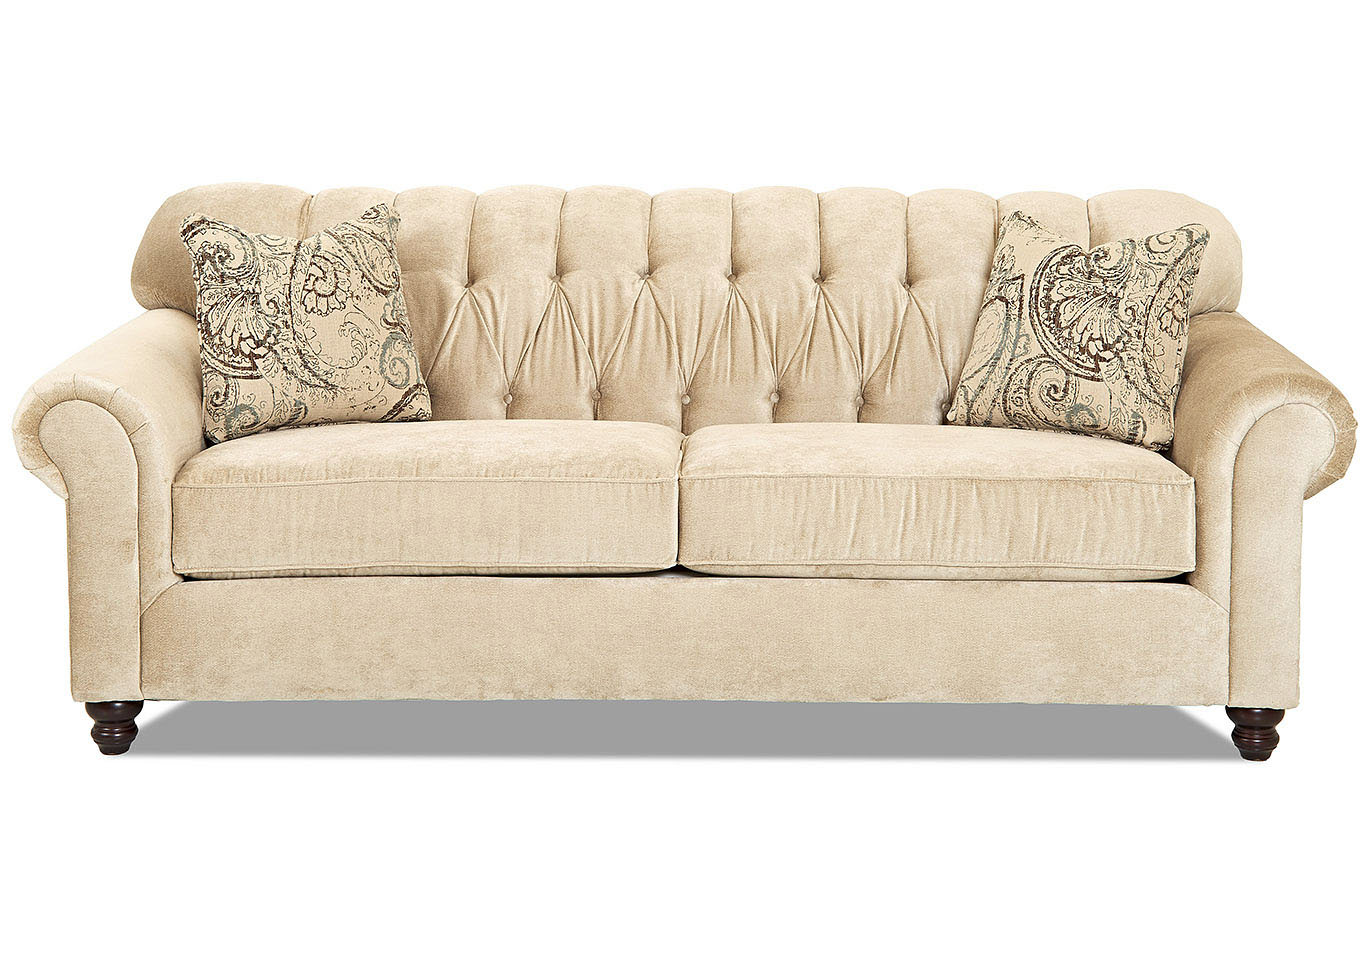 Sinclair Ecru Stationary Fabric Sofa,Klaussner Home Furnishings